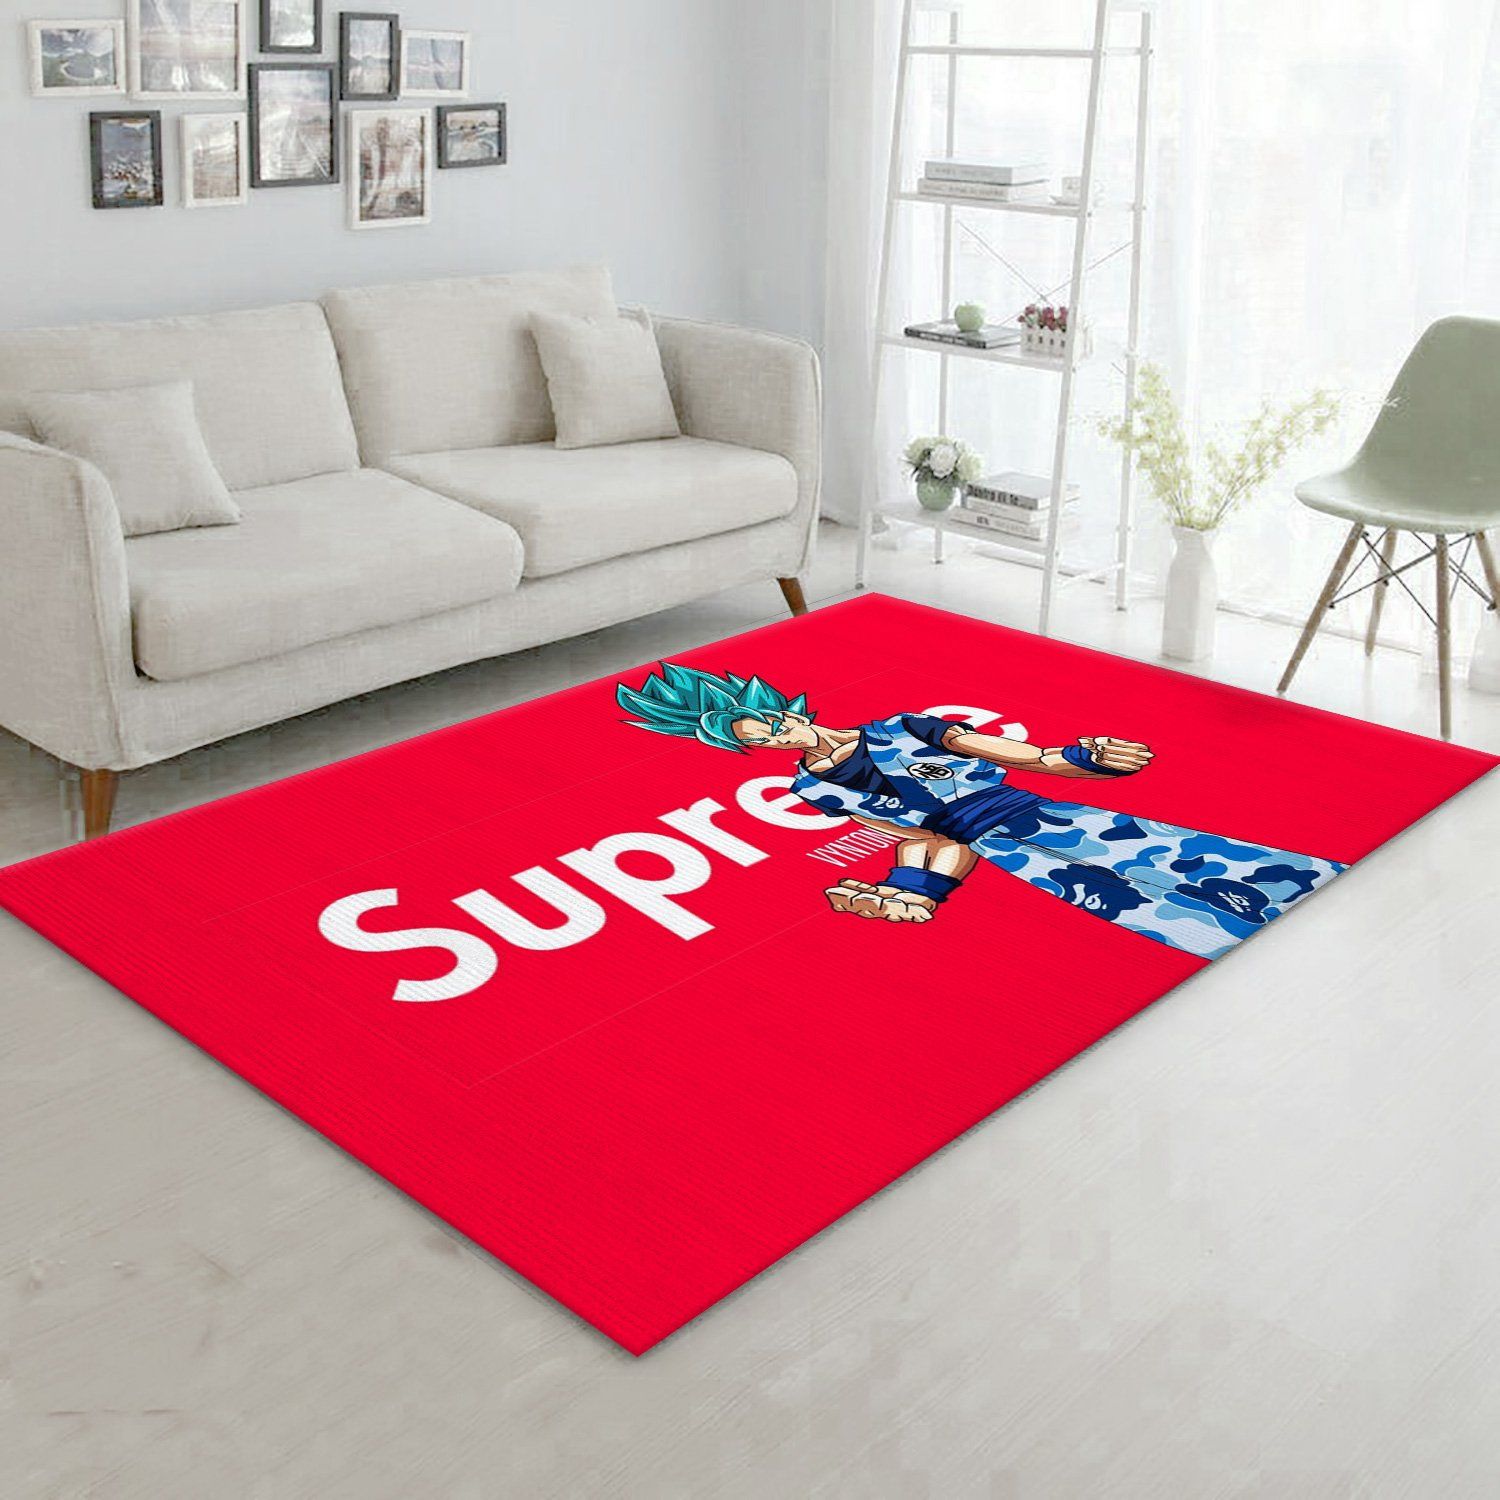 Supreme Songoku Rectangle Rug Fashion Brand Home Decor Area Carpet Luxury Door Mat